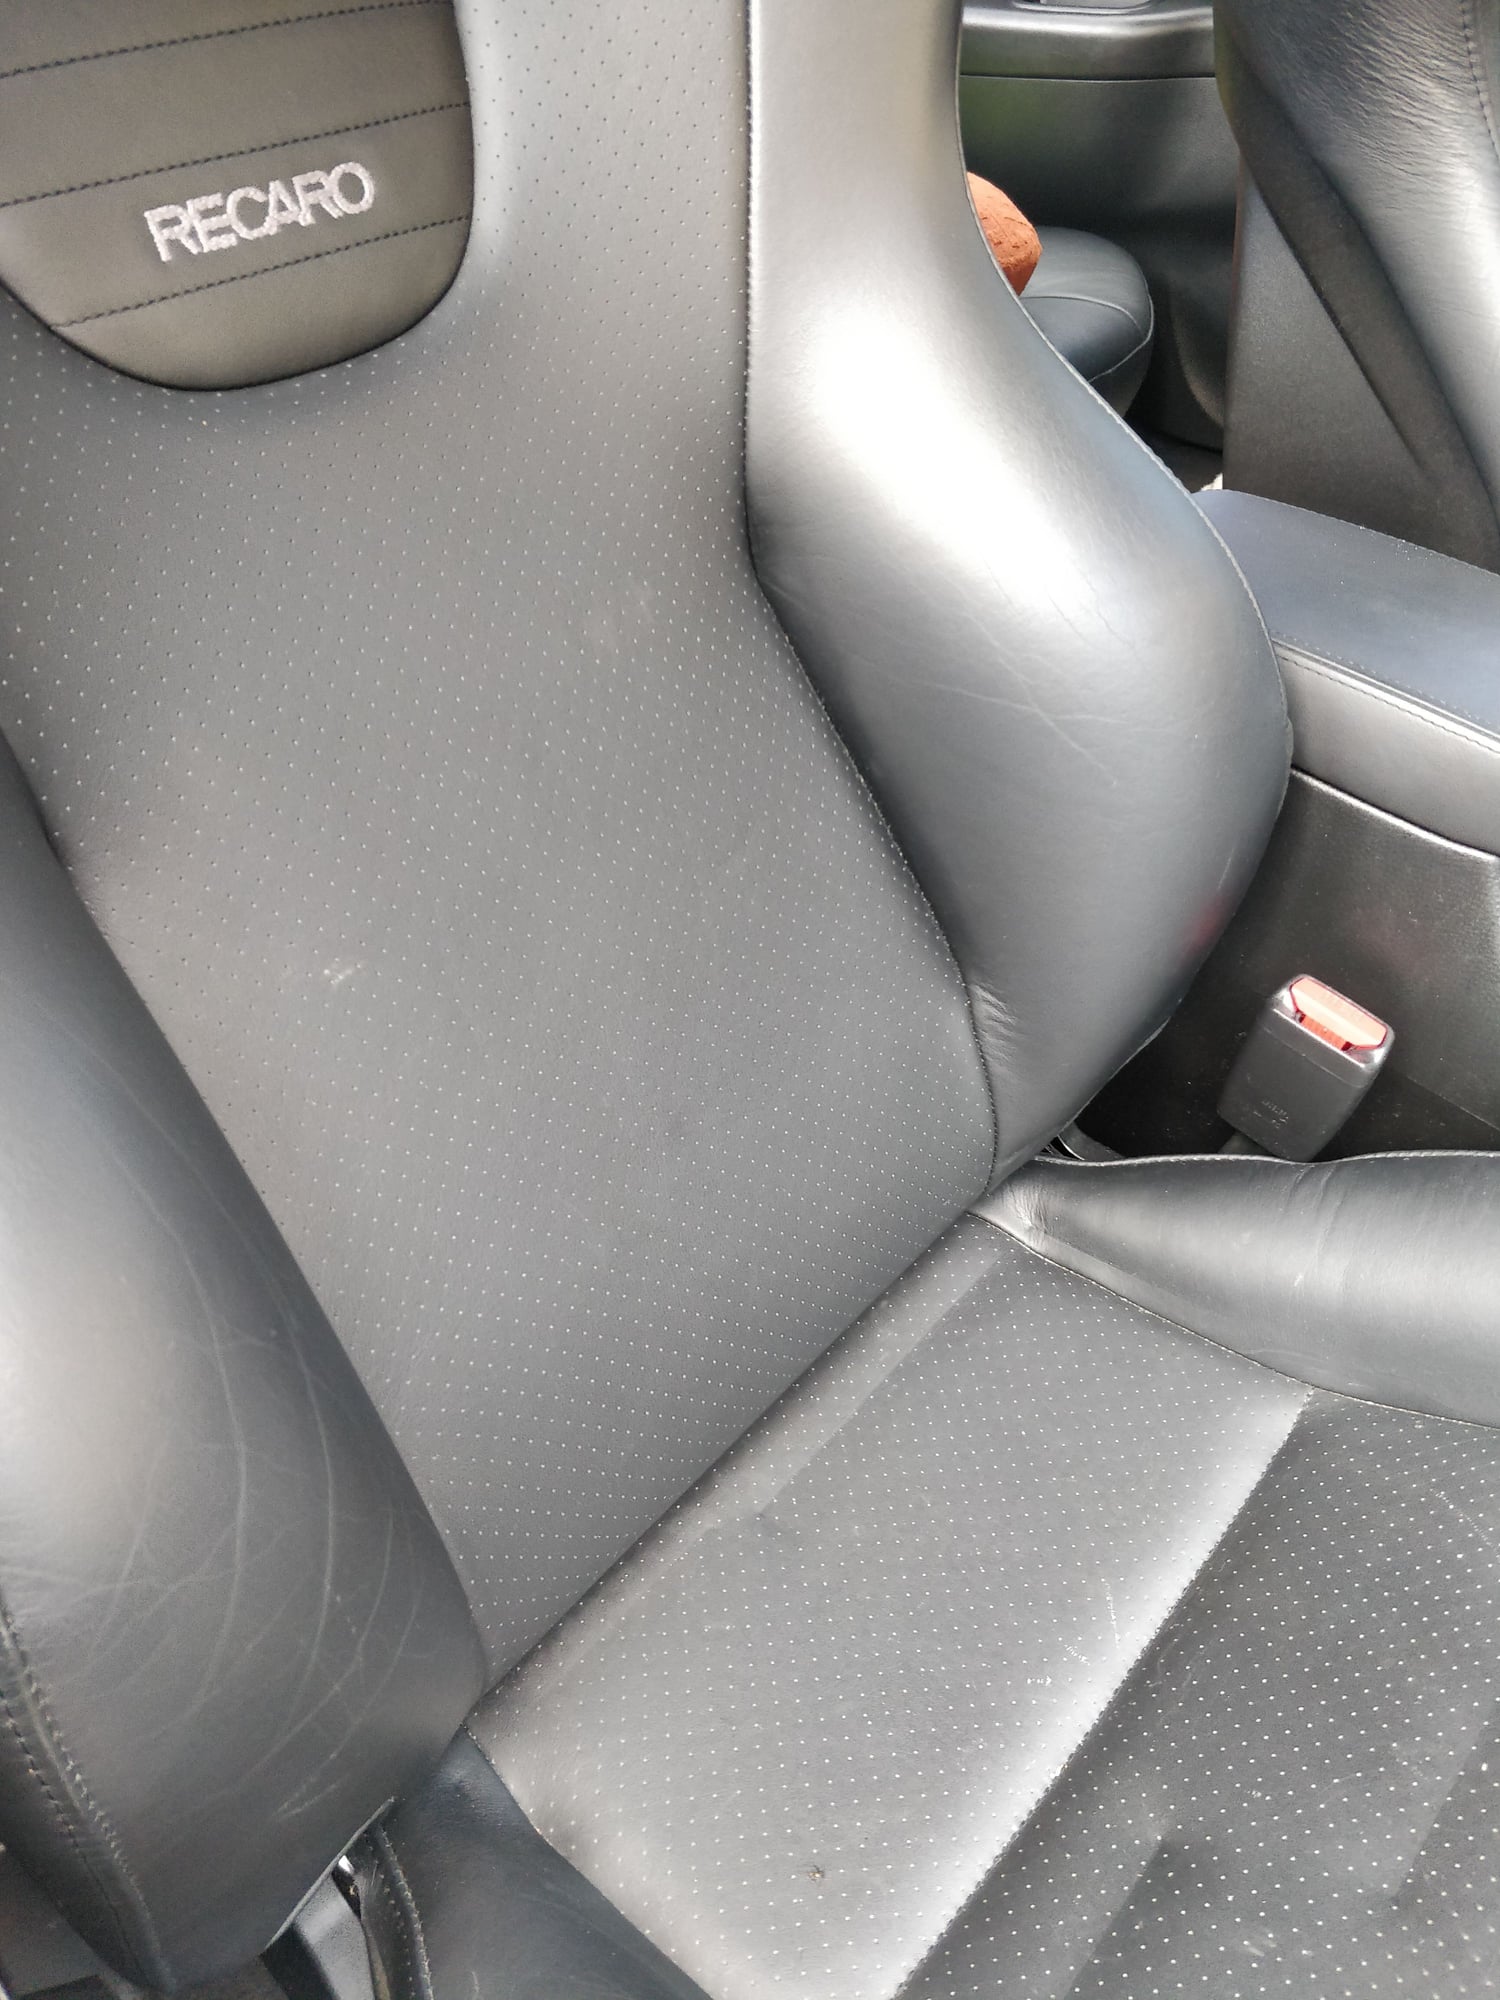 Interior/Upholstery - Evolution IX SSL Front Seats Great Condition - Used - 2004 to 2006 Mitsubishi Lancer Evolution - Sunrise, FL 33313, United States